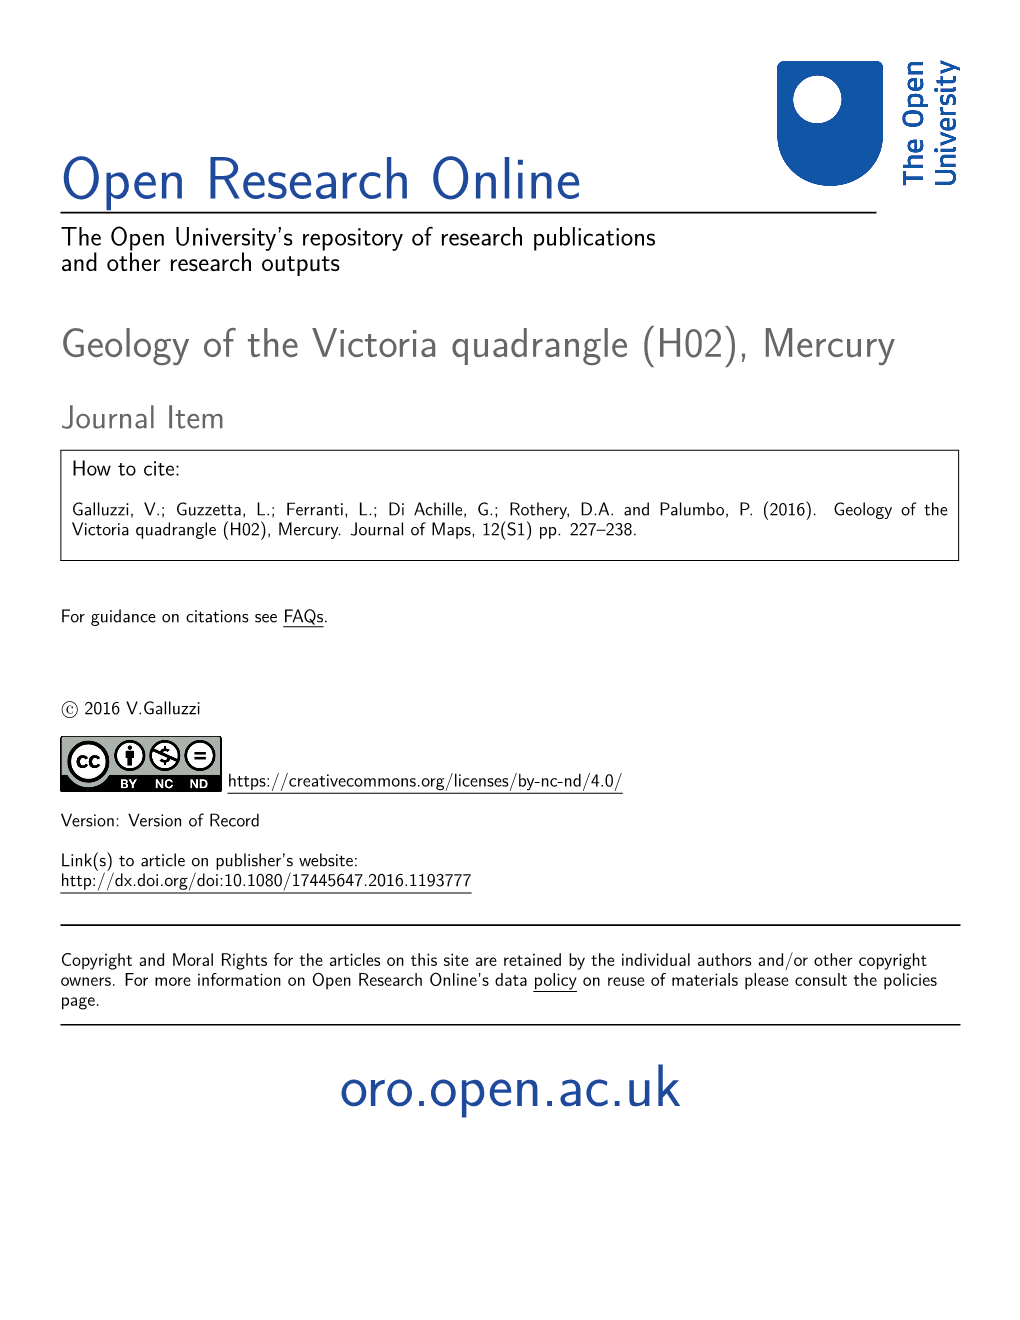 Geology of the Victoria Quadrangle (H02), Mercury